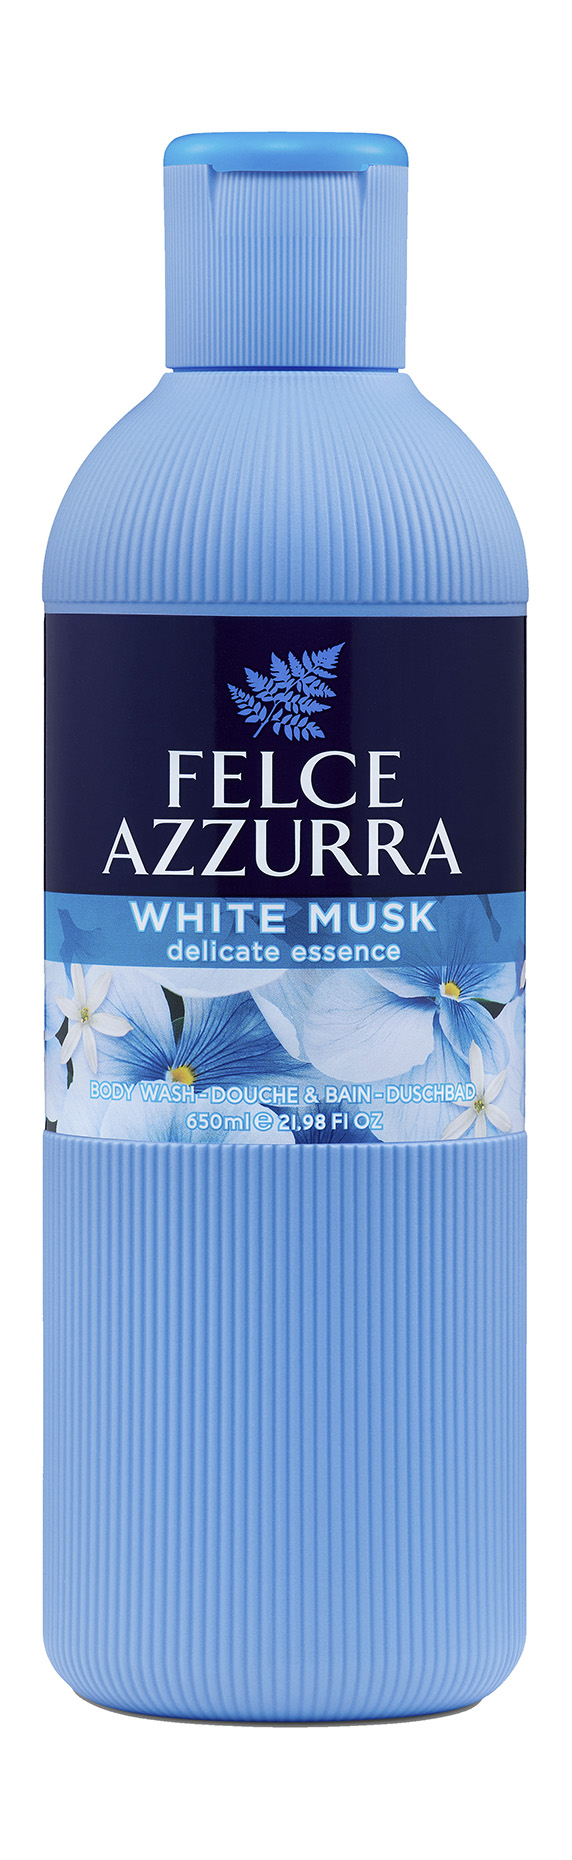 Гель для душа Felce Azzurra White Musk Delicate Essence парфюмированный, 650 мл wellery delicate wool гель для стирки белья из шерсти шелка кашемира 1000 0